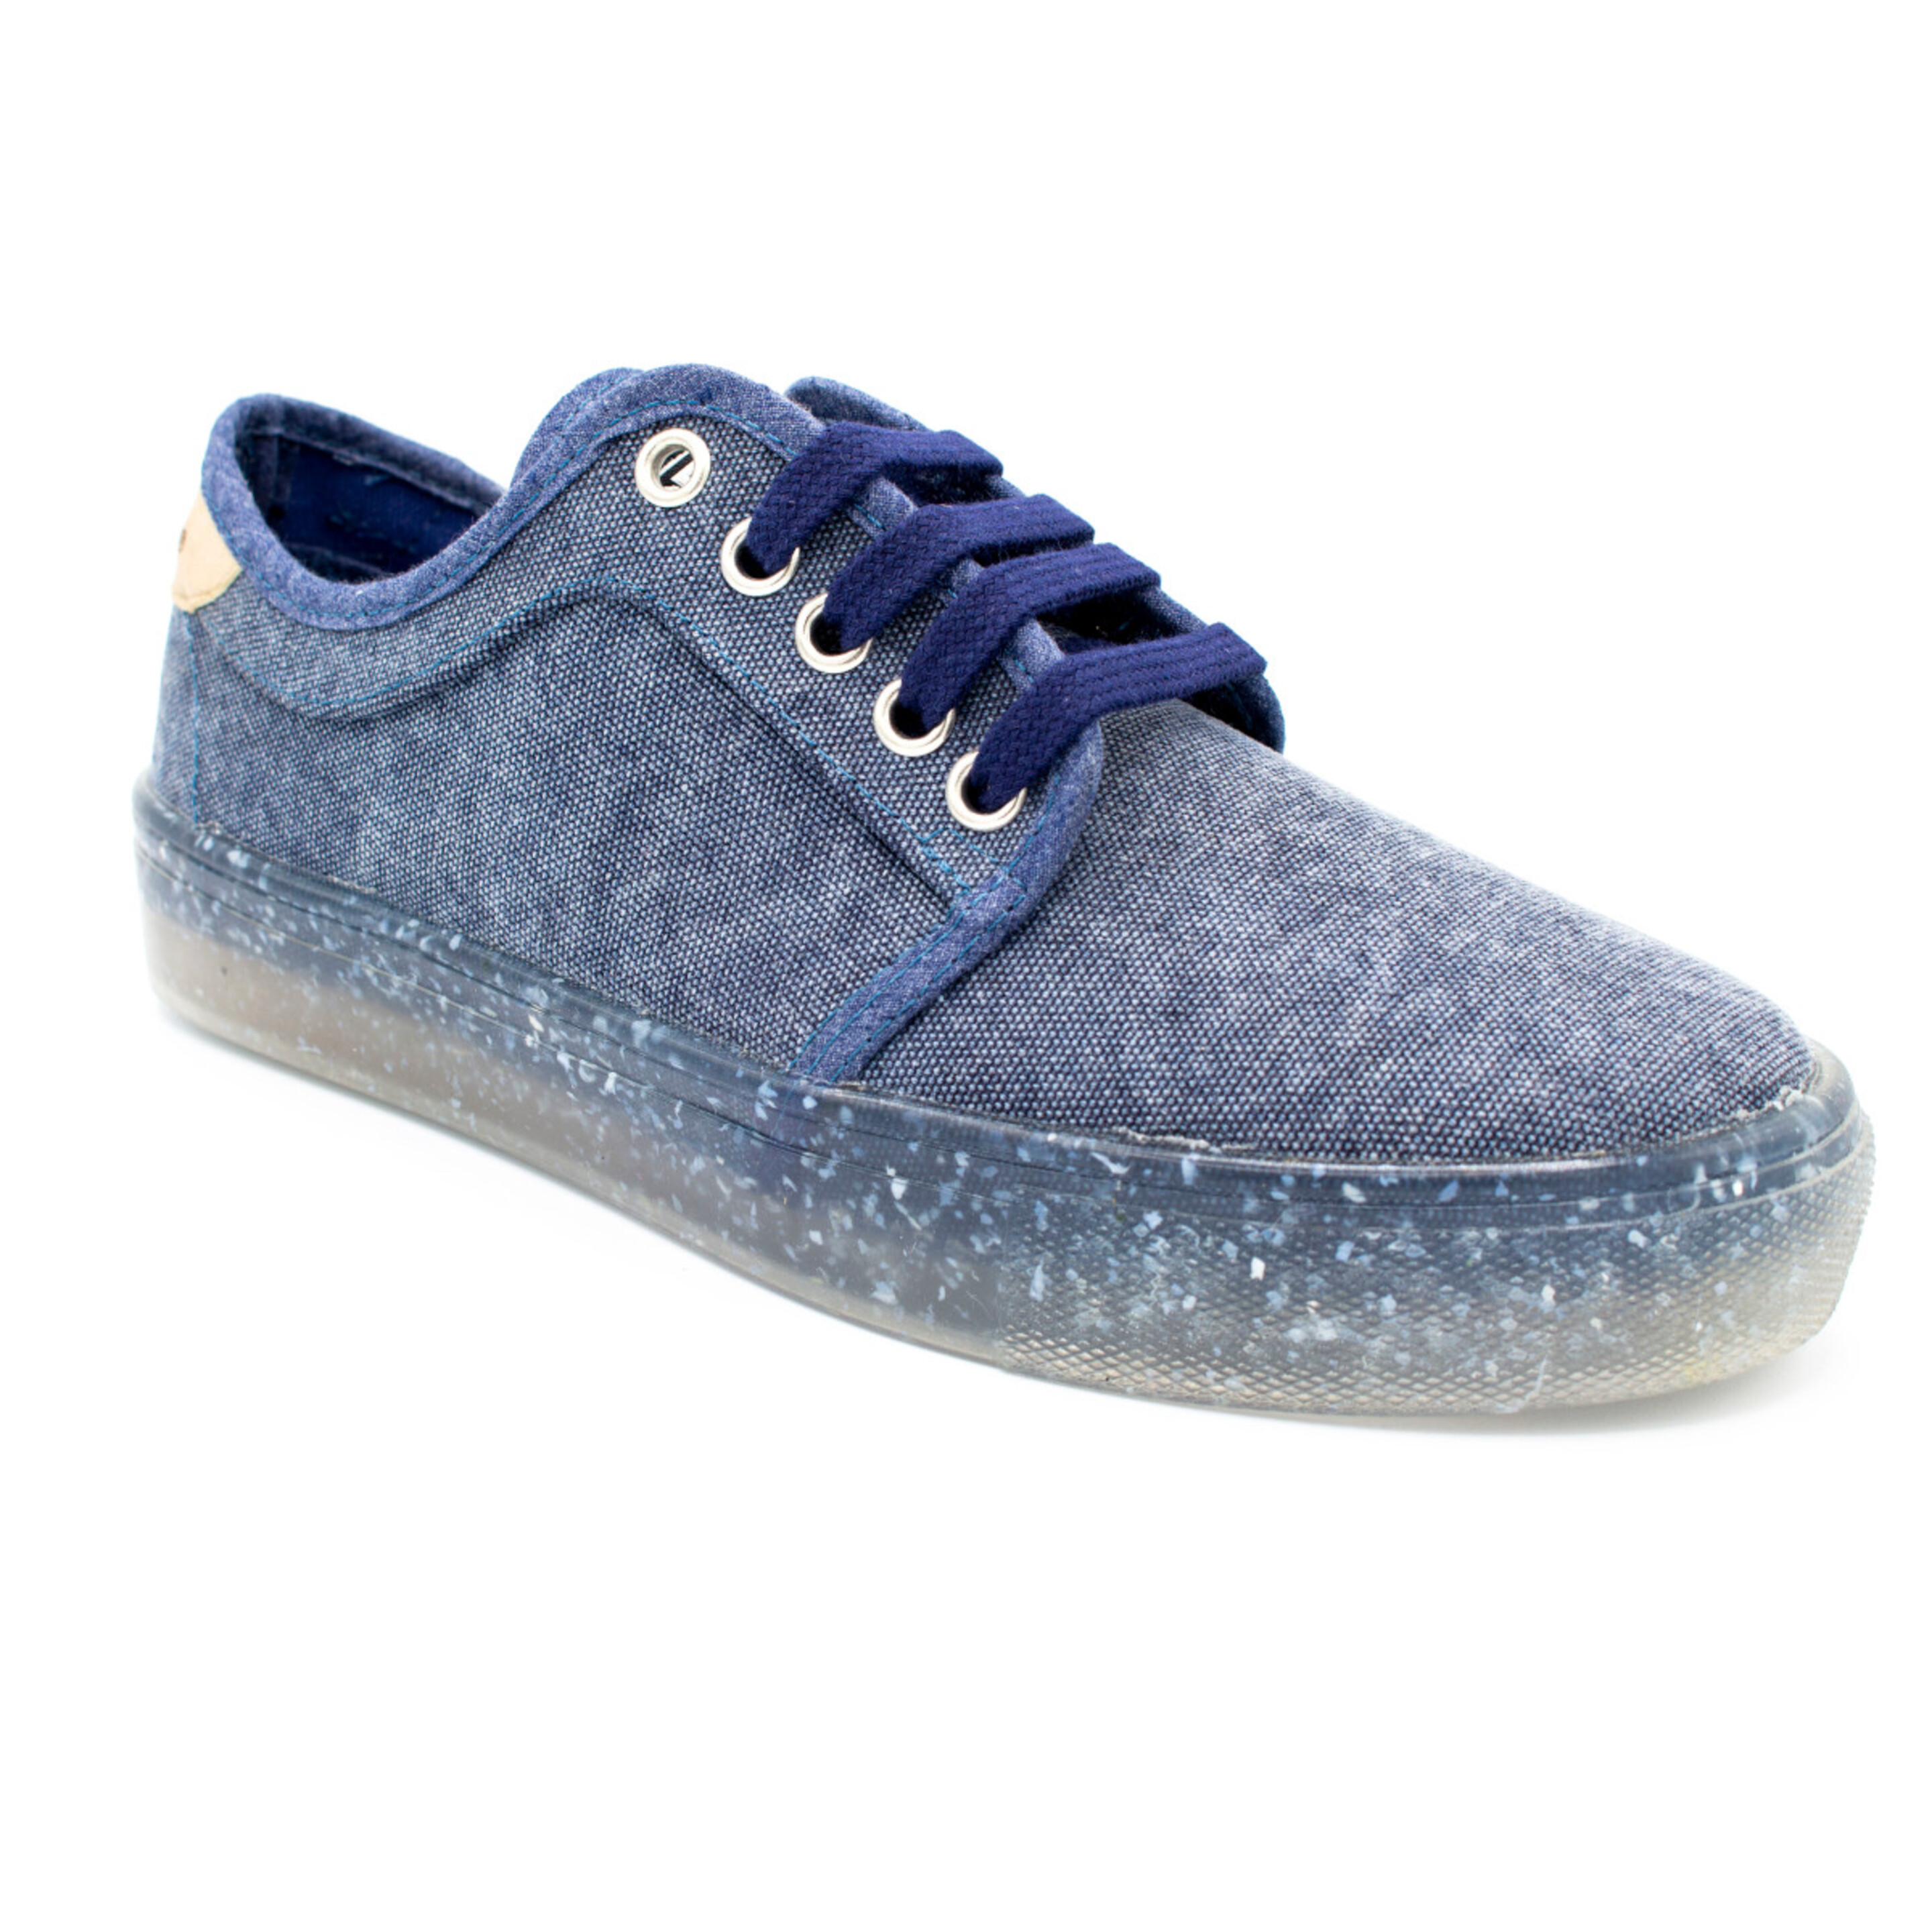 Sneaker Recykers Peckham - azul_marino  MKP